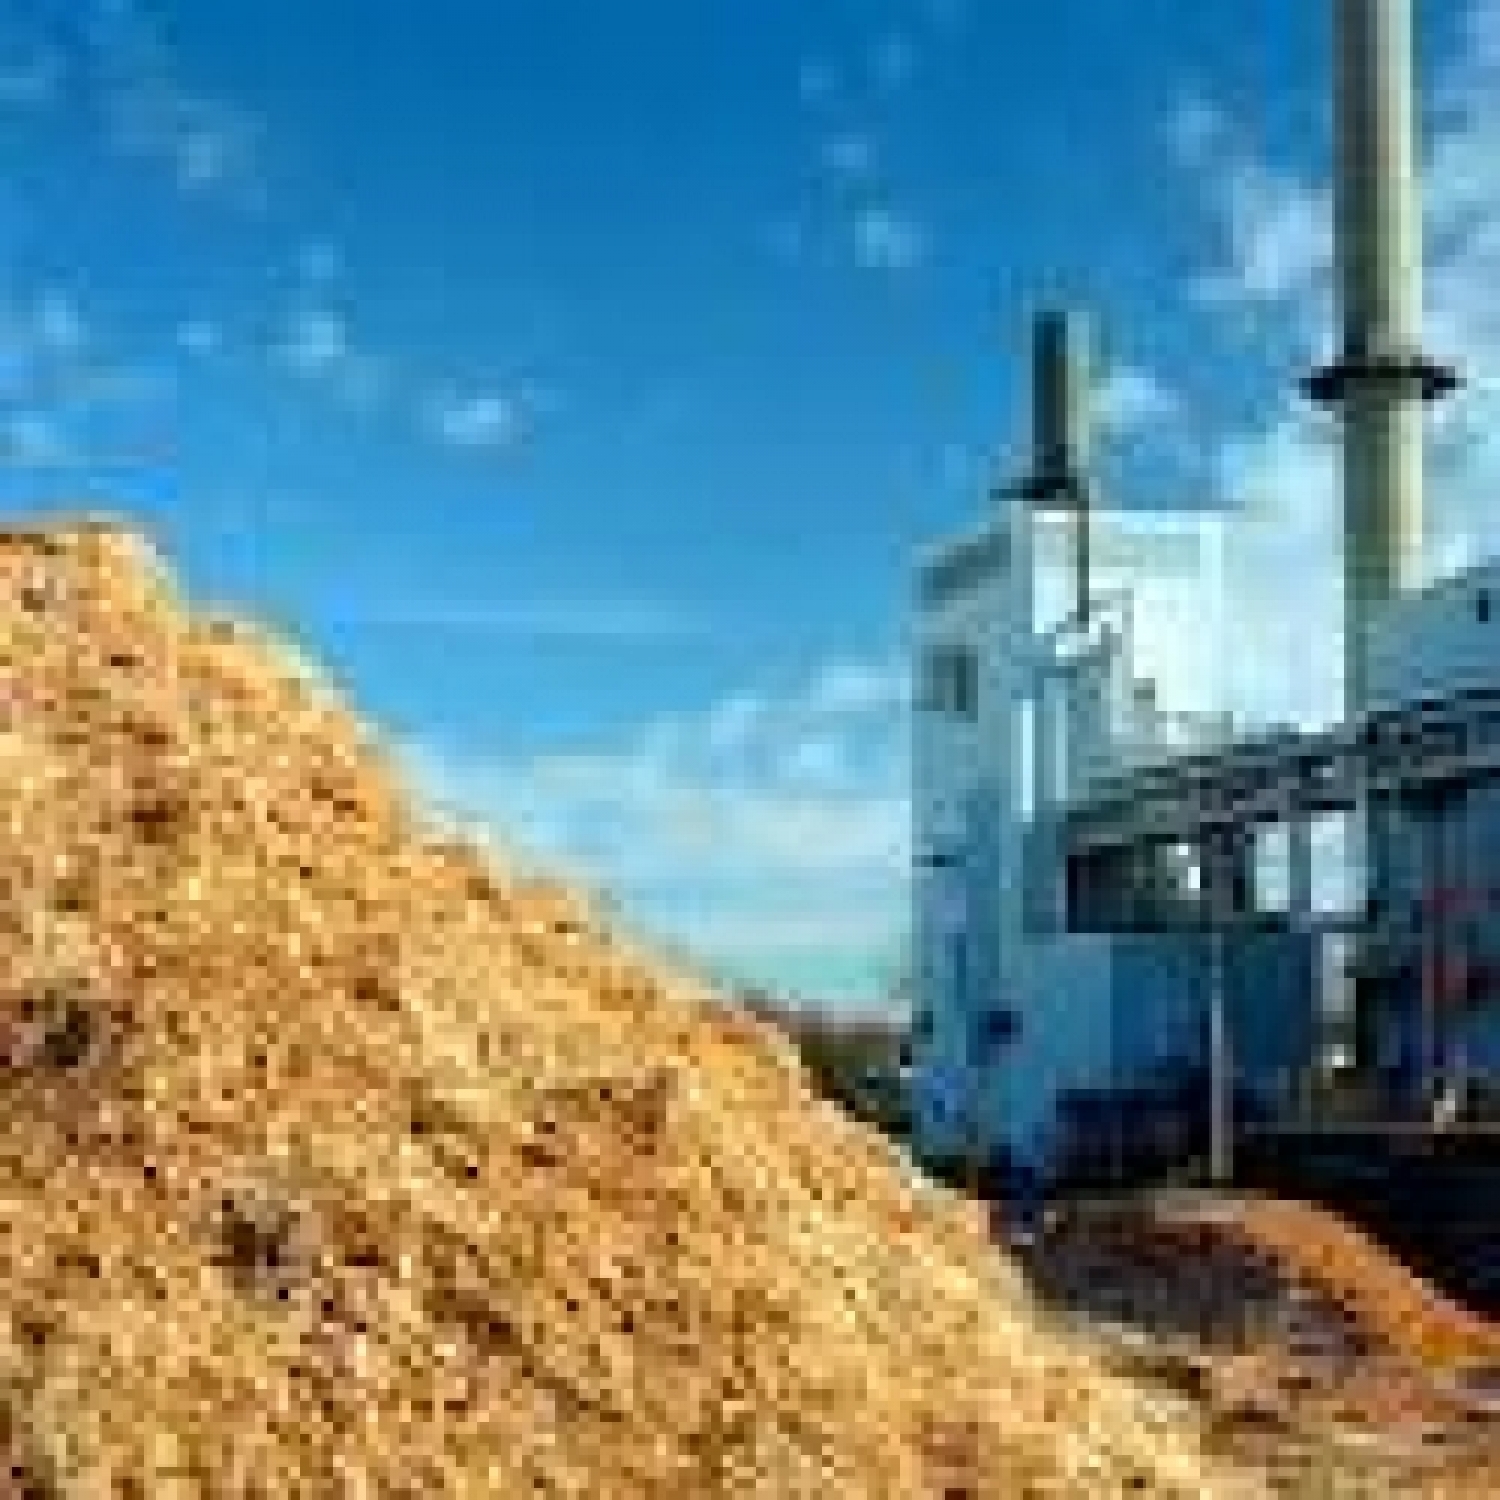 centrale biomasse.jpg